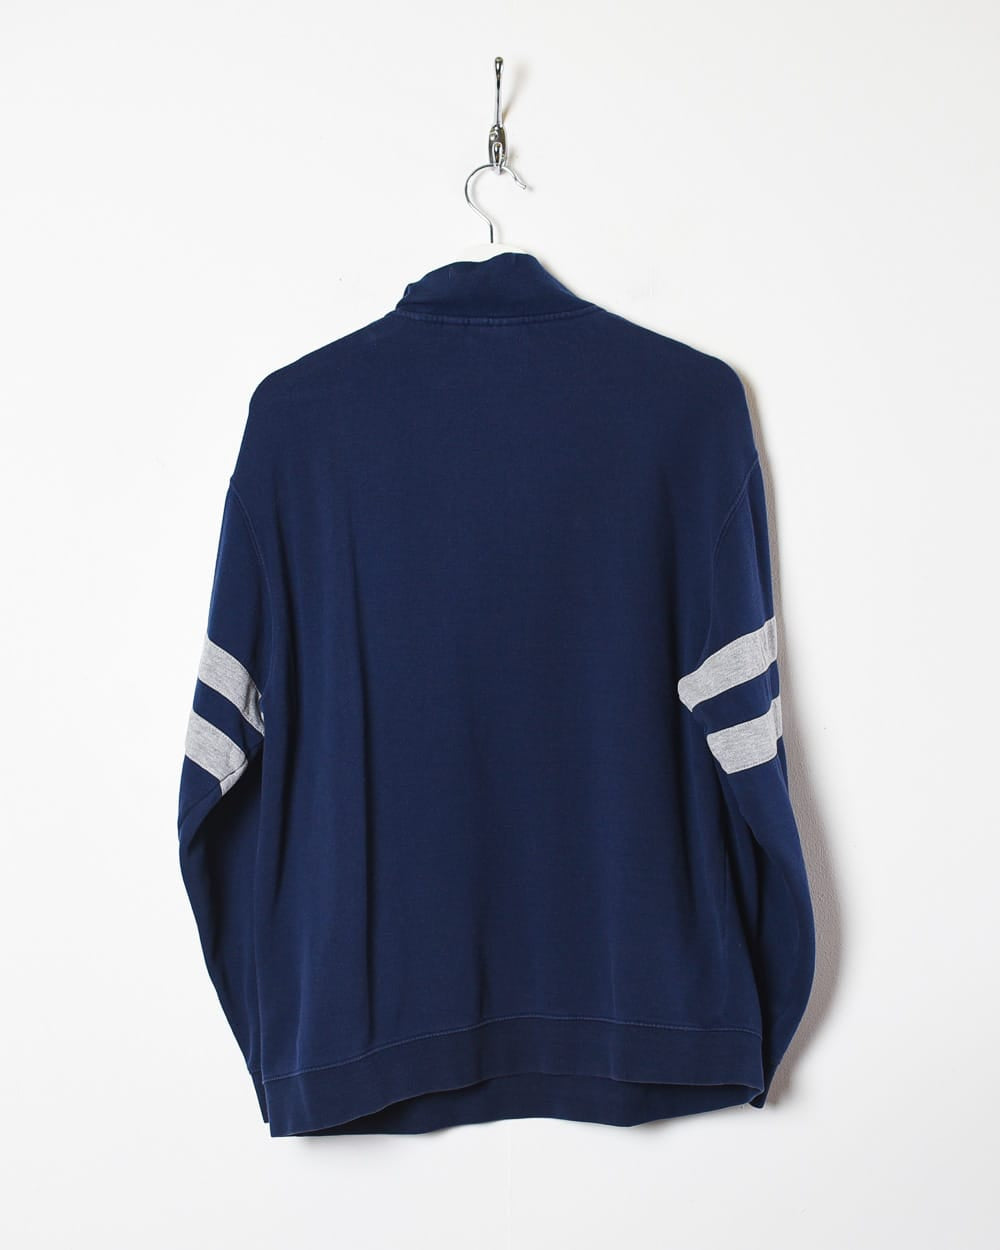 Navy Fila 1/4 Zip Sweatshirt - Medium